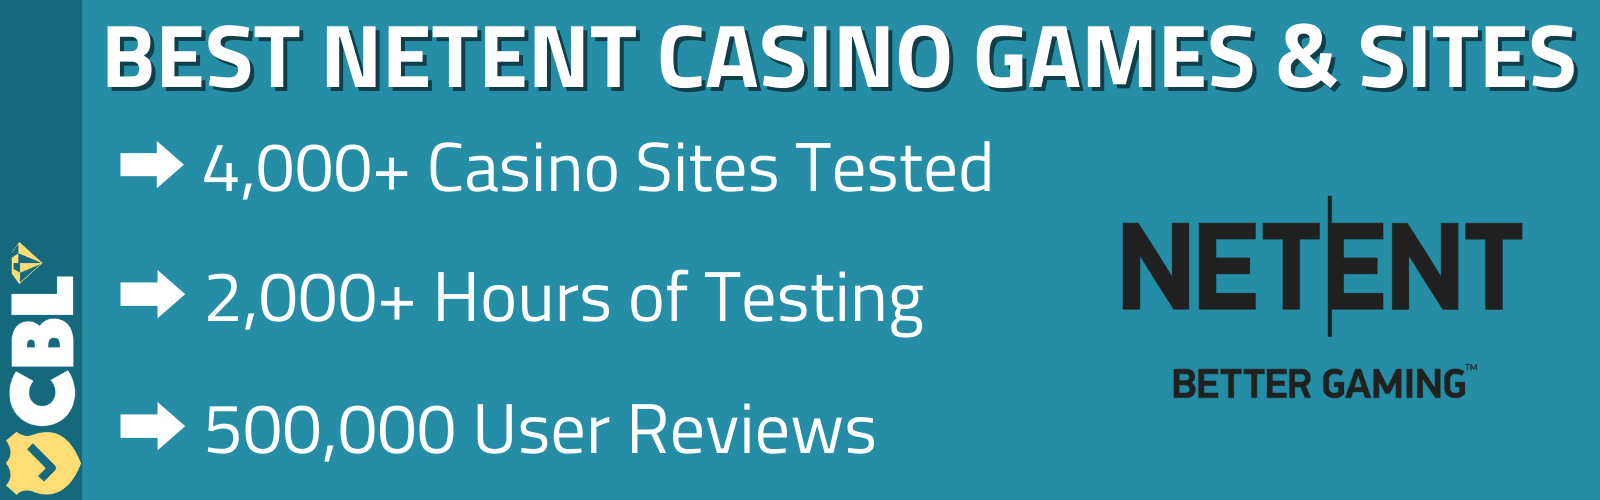 BEST NETENT CASINO GAMES & SITES